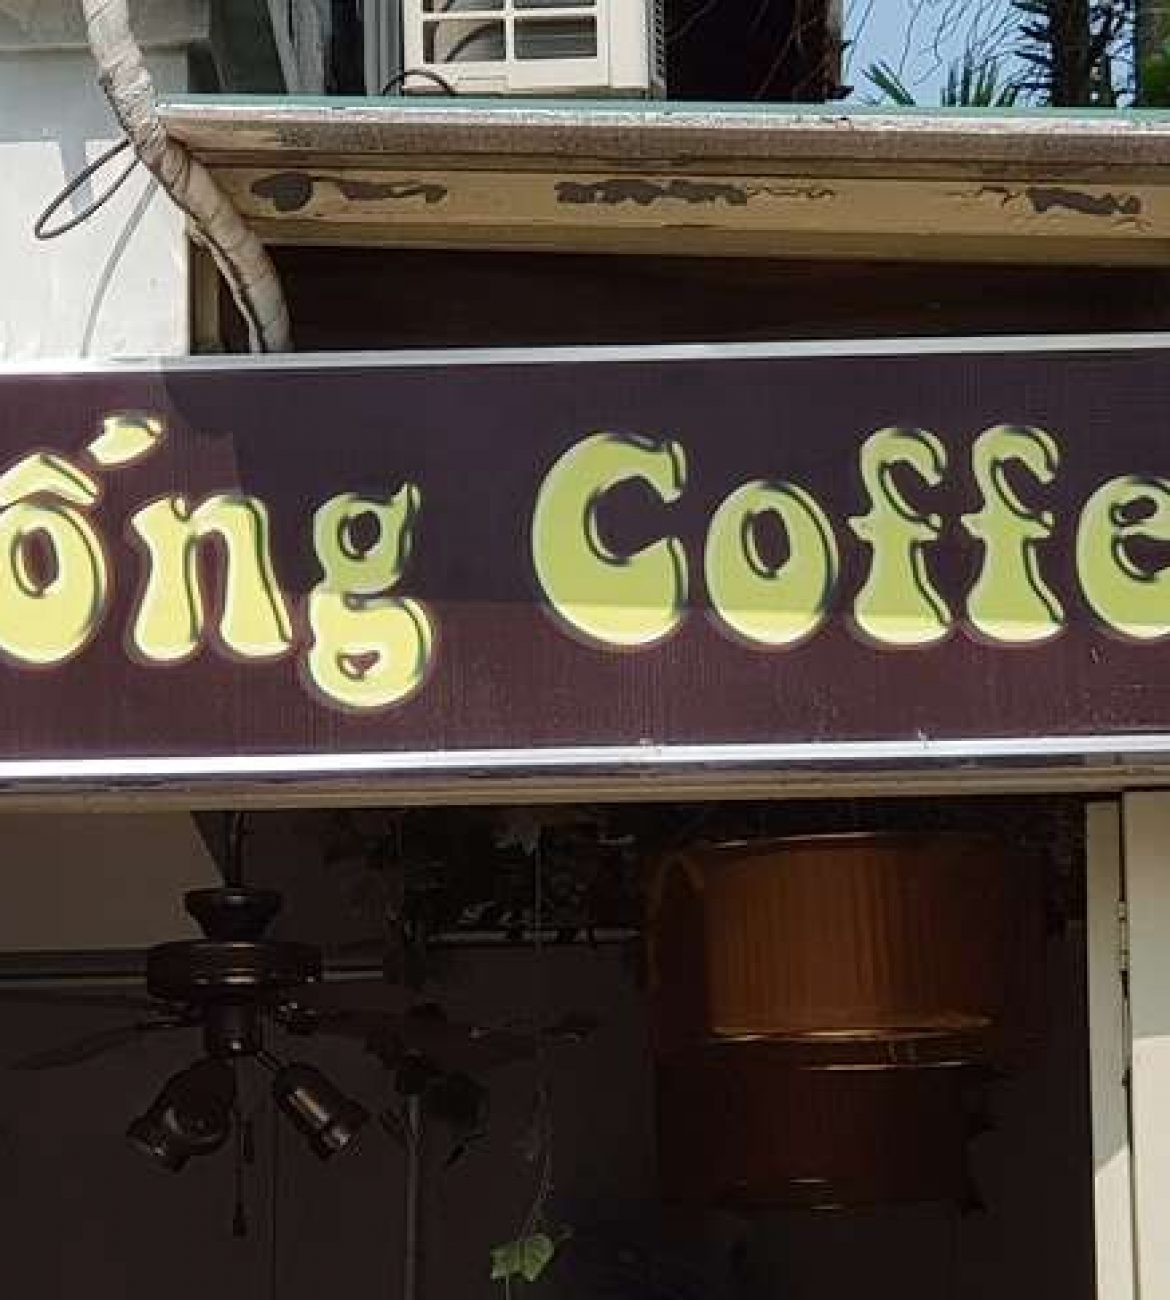 Bong Coffee – A Hilarious Shop Name!